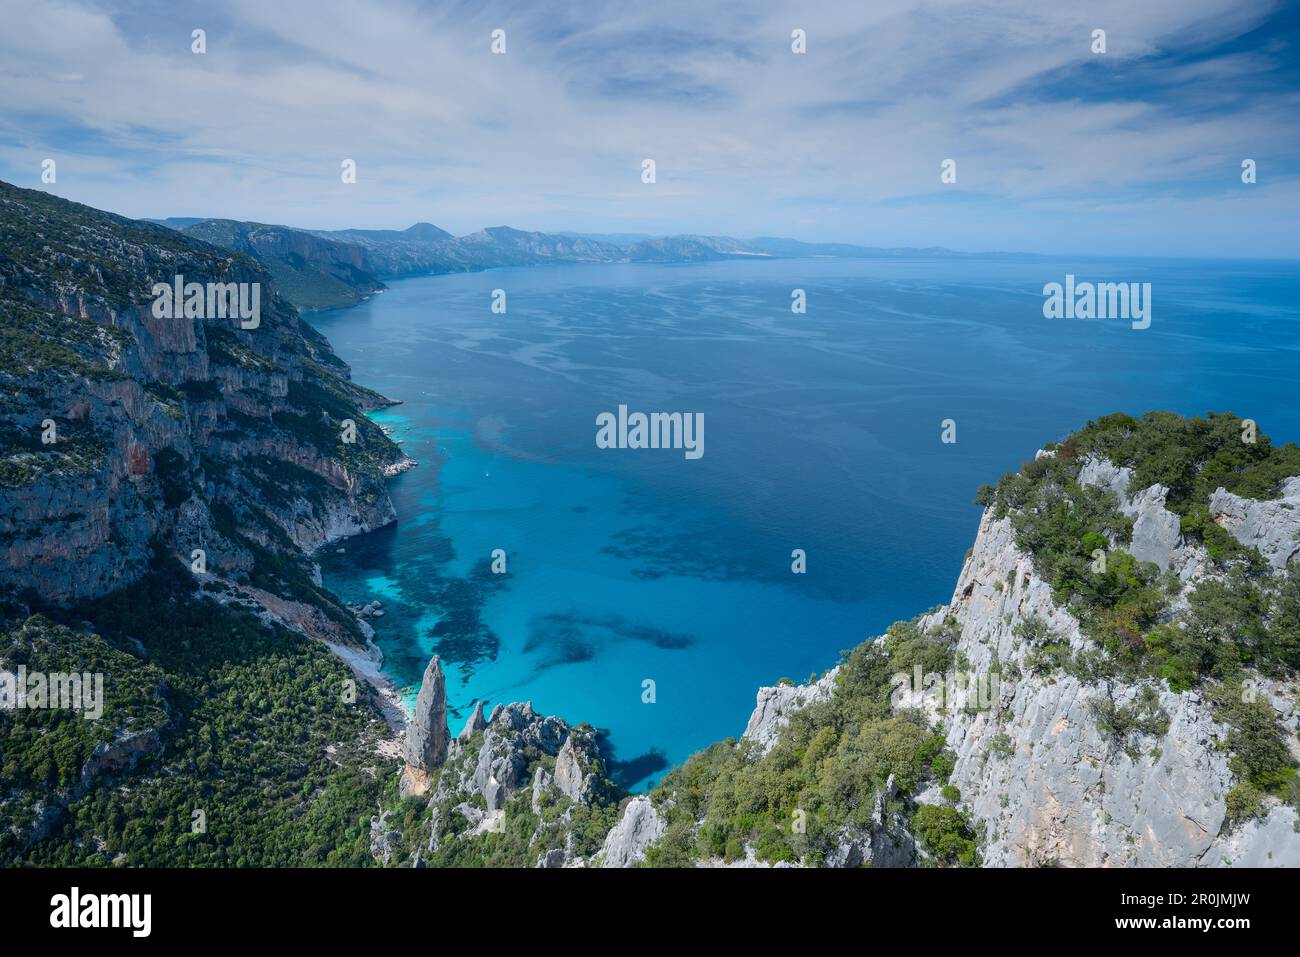 Mountainous coastal landscape, Cala Goloritze, rock-needle Aguglia Goloritze, Golfo di Orosei, Selvaggio Blu, Sardinia, Italy, Europe Stock Photo